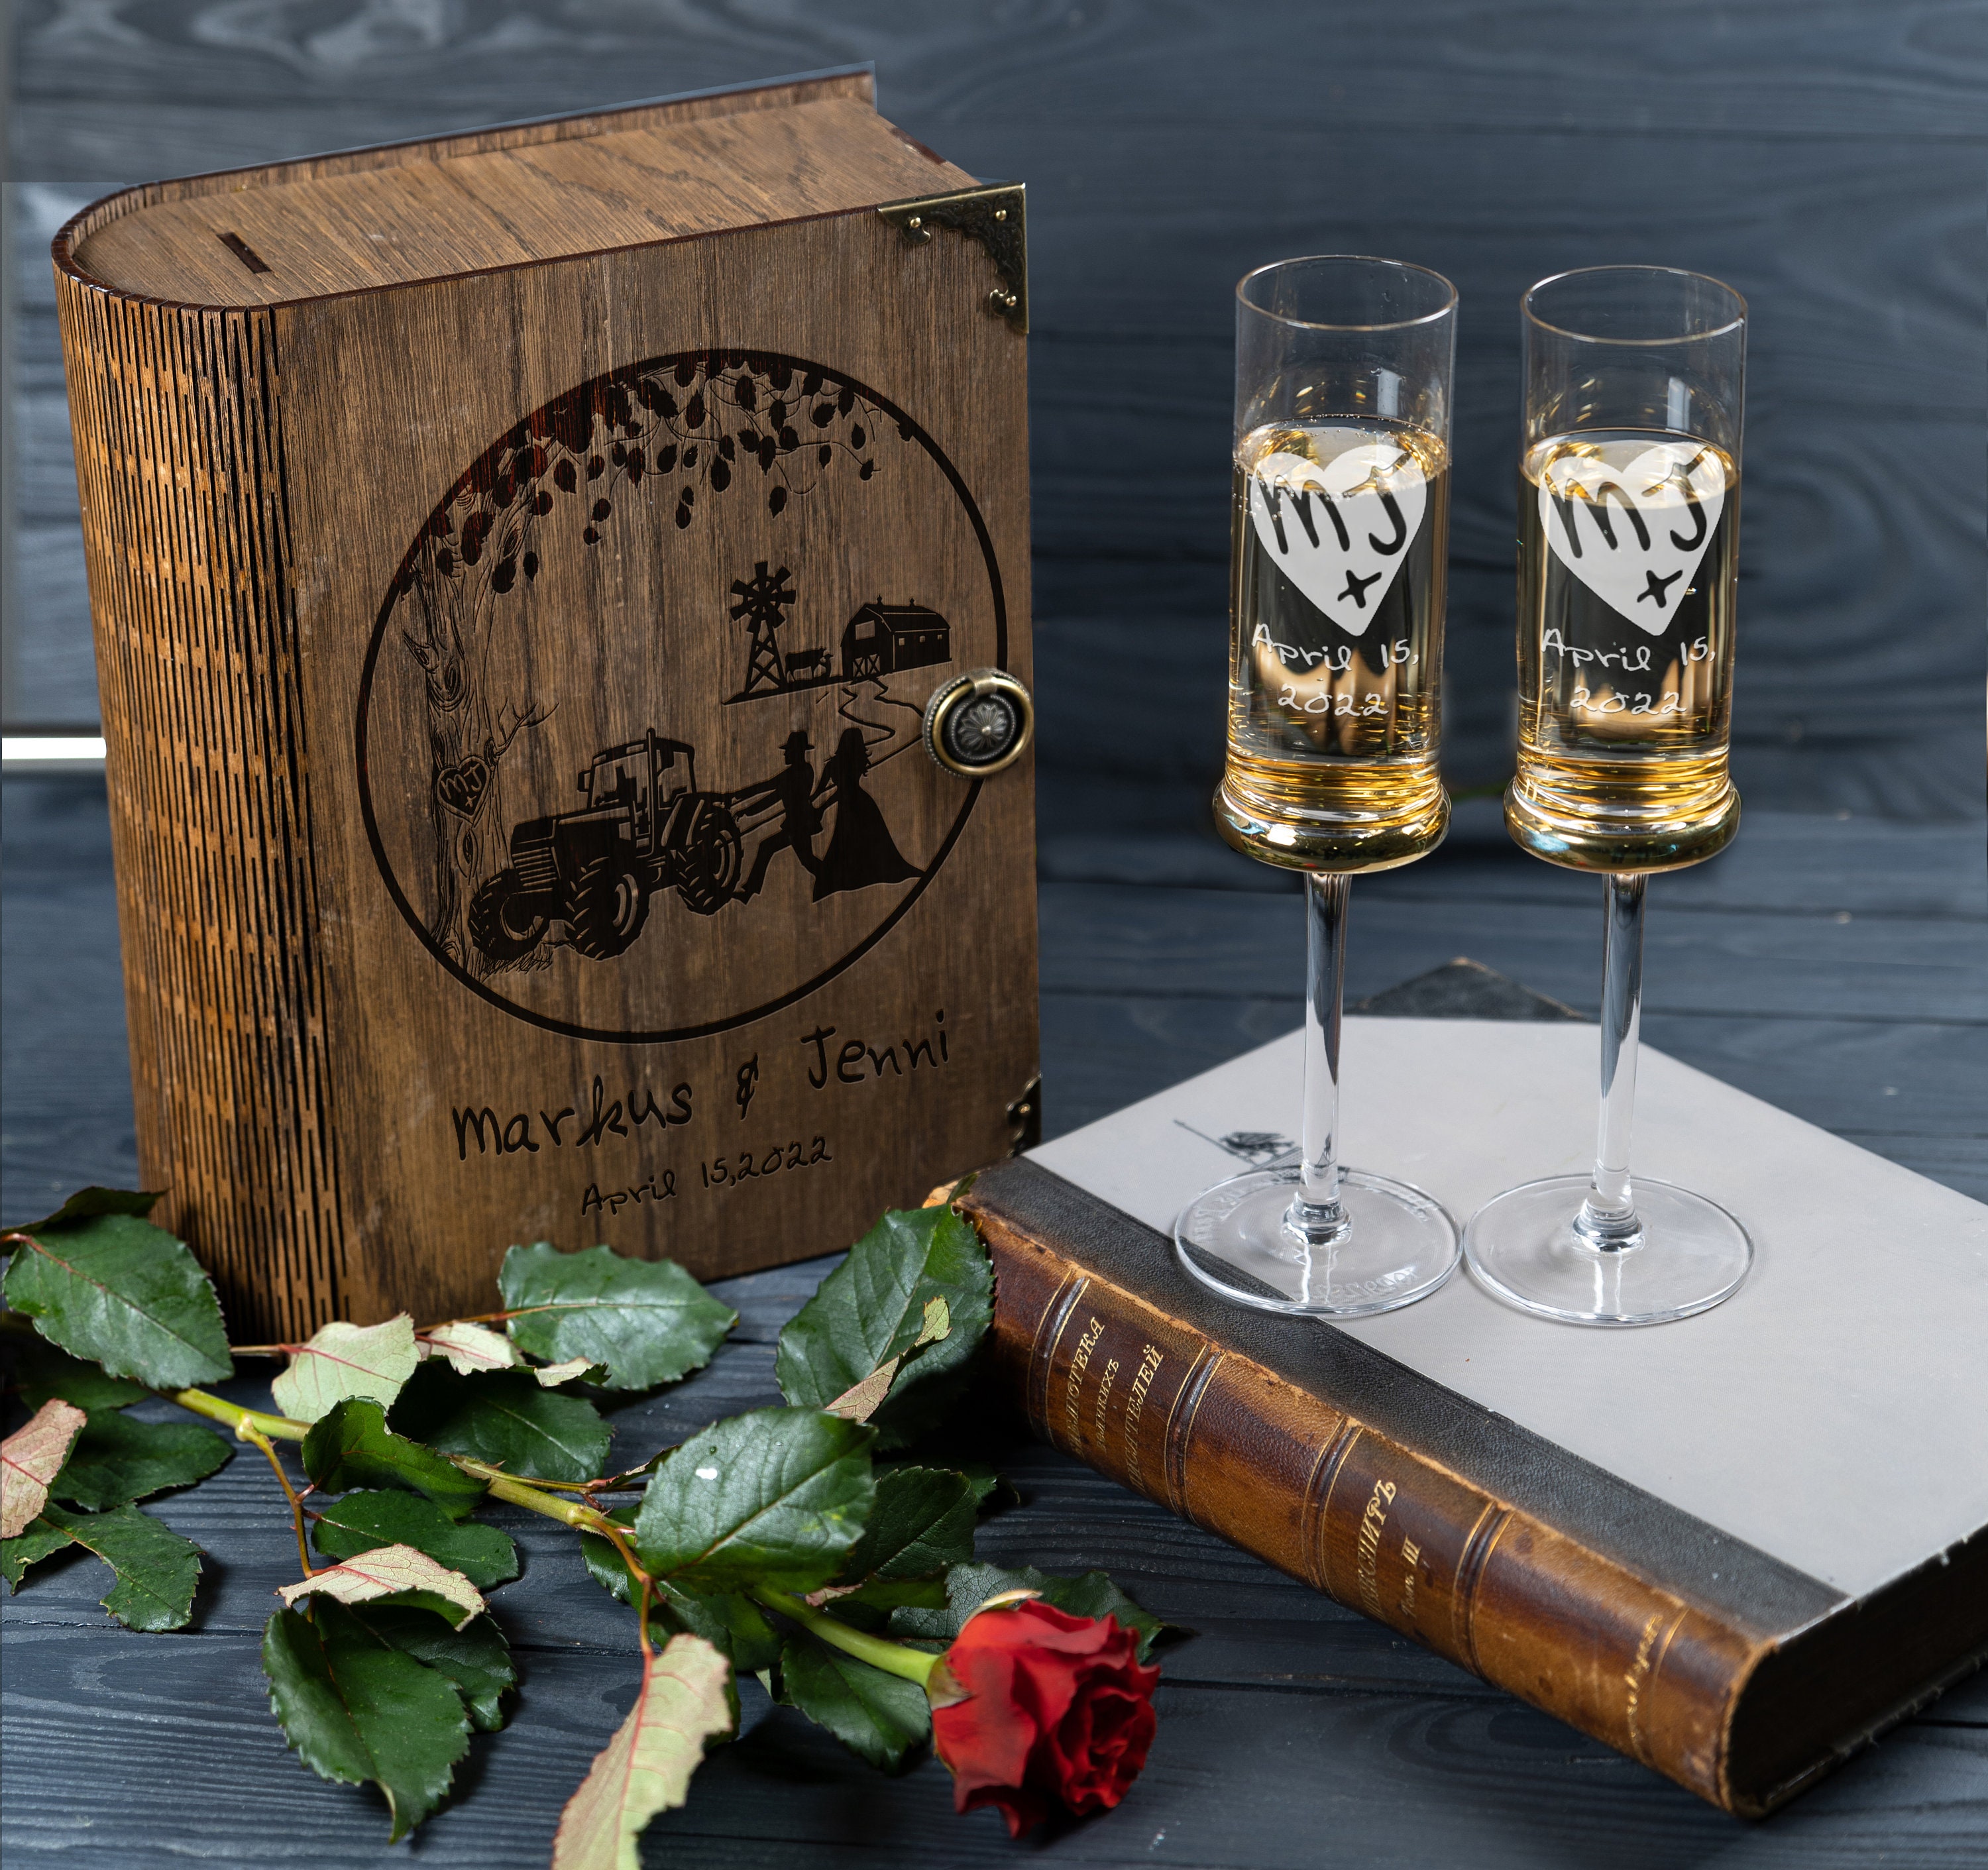 Original gift box] Customized Moet birthday wedding champagne gift  customized portrait logo hand-carved - Shop dyow520 Wine, Beer & Spirits -  Pinkoi